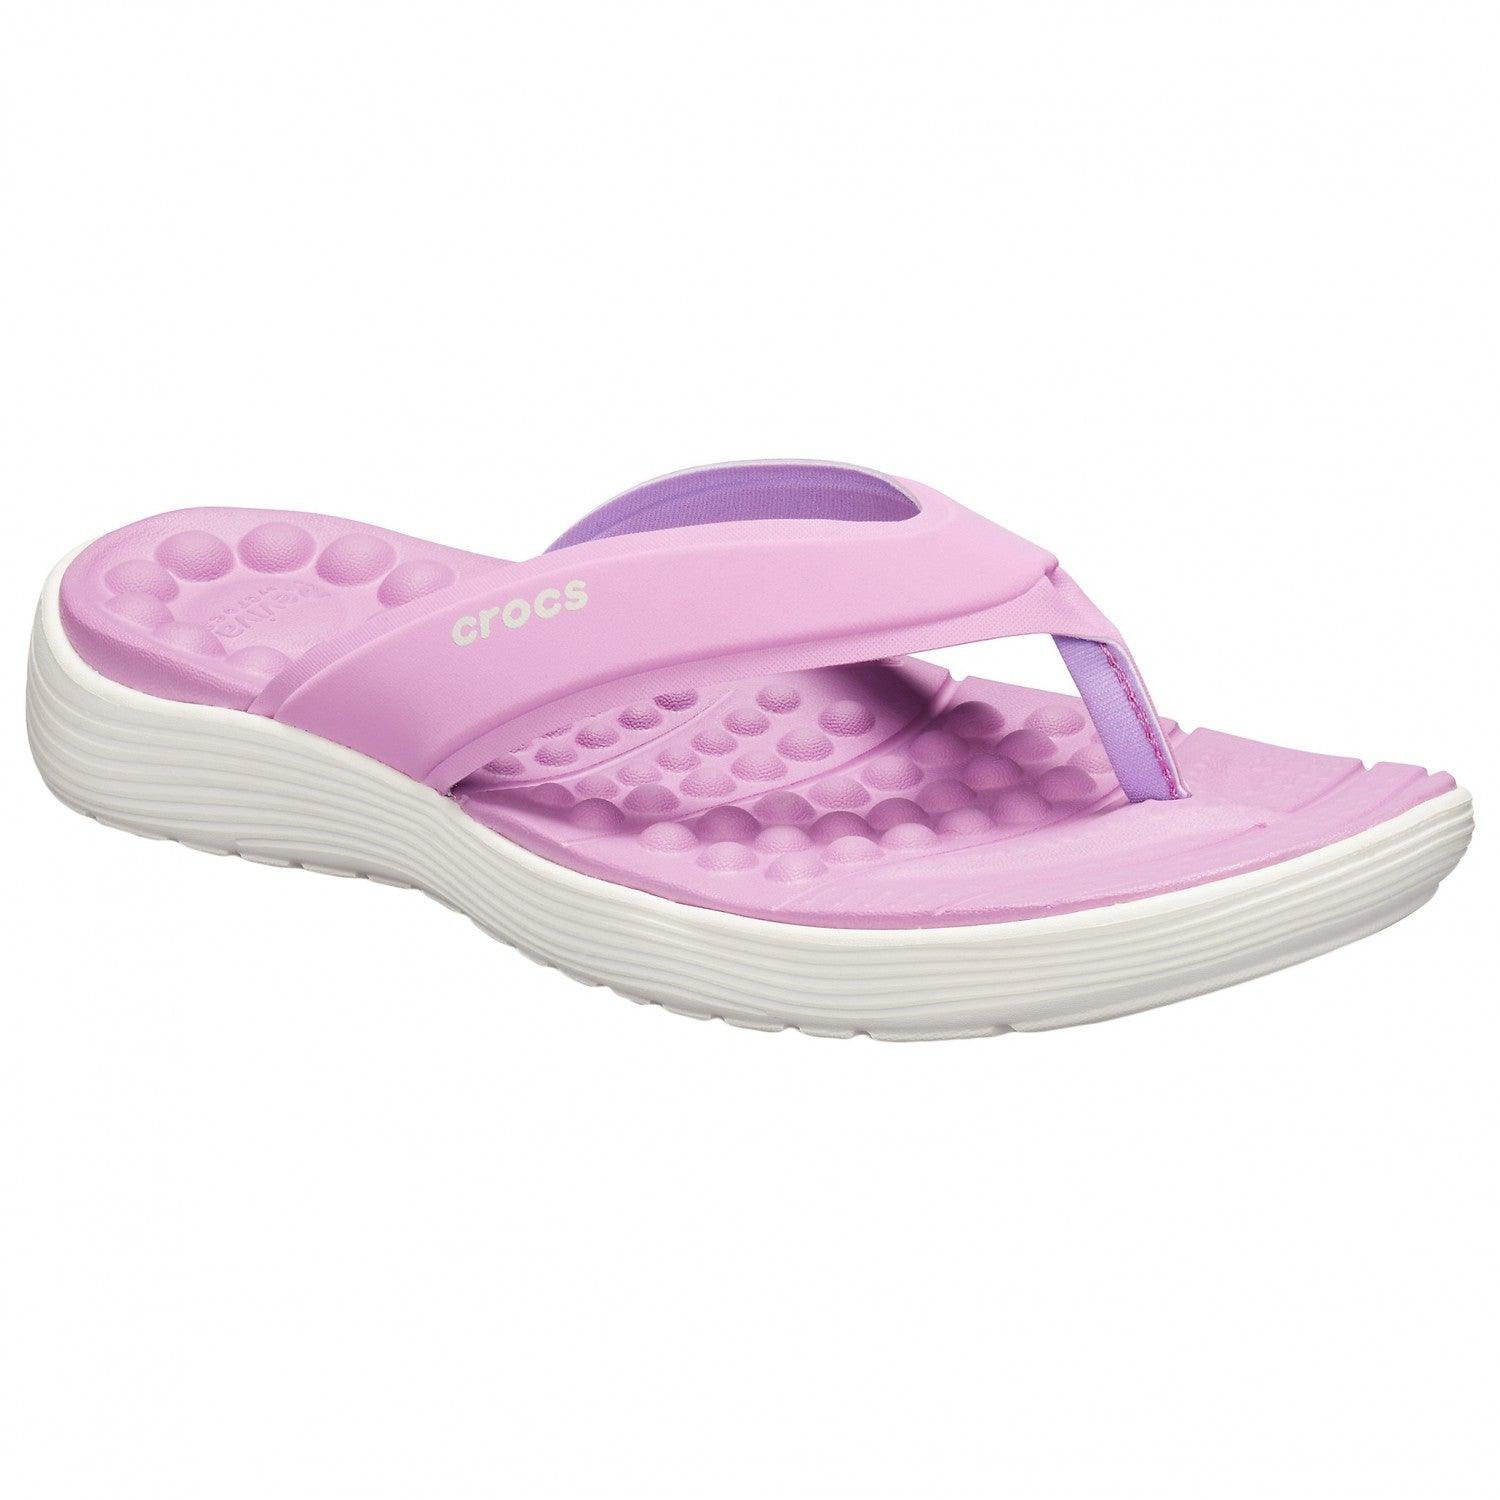 Crocs Reviva Flip - Purple - mStore.Kh | mTravel Store